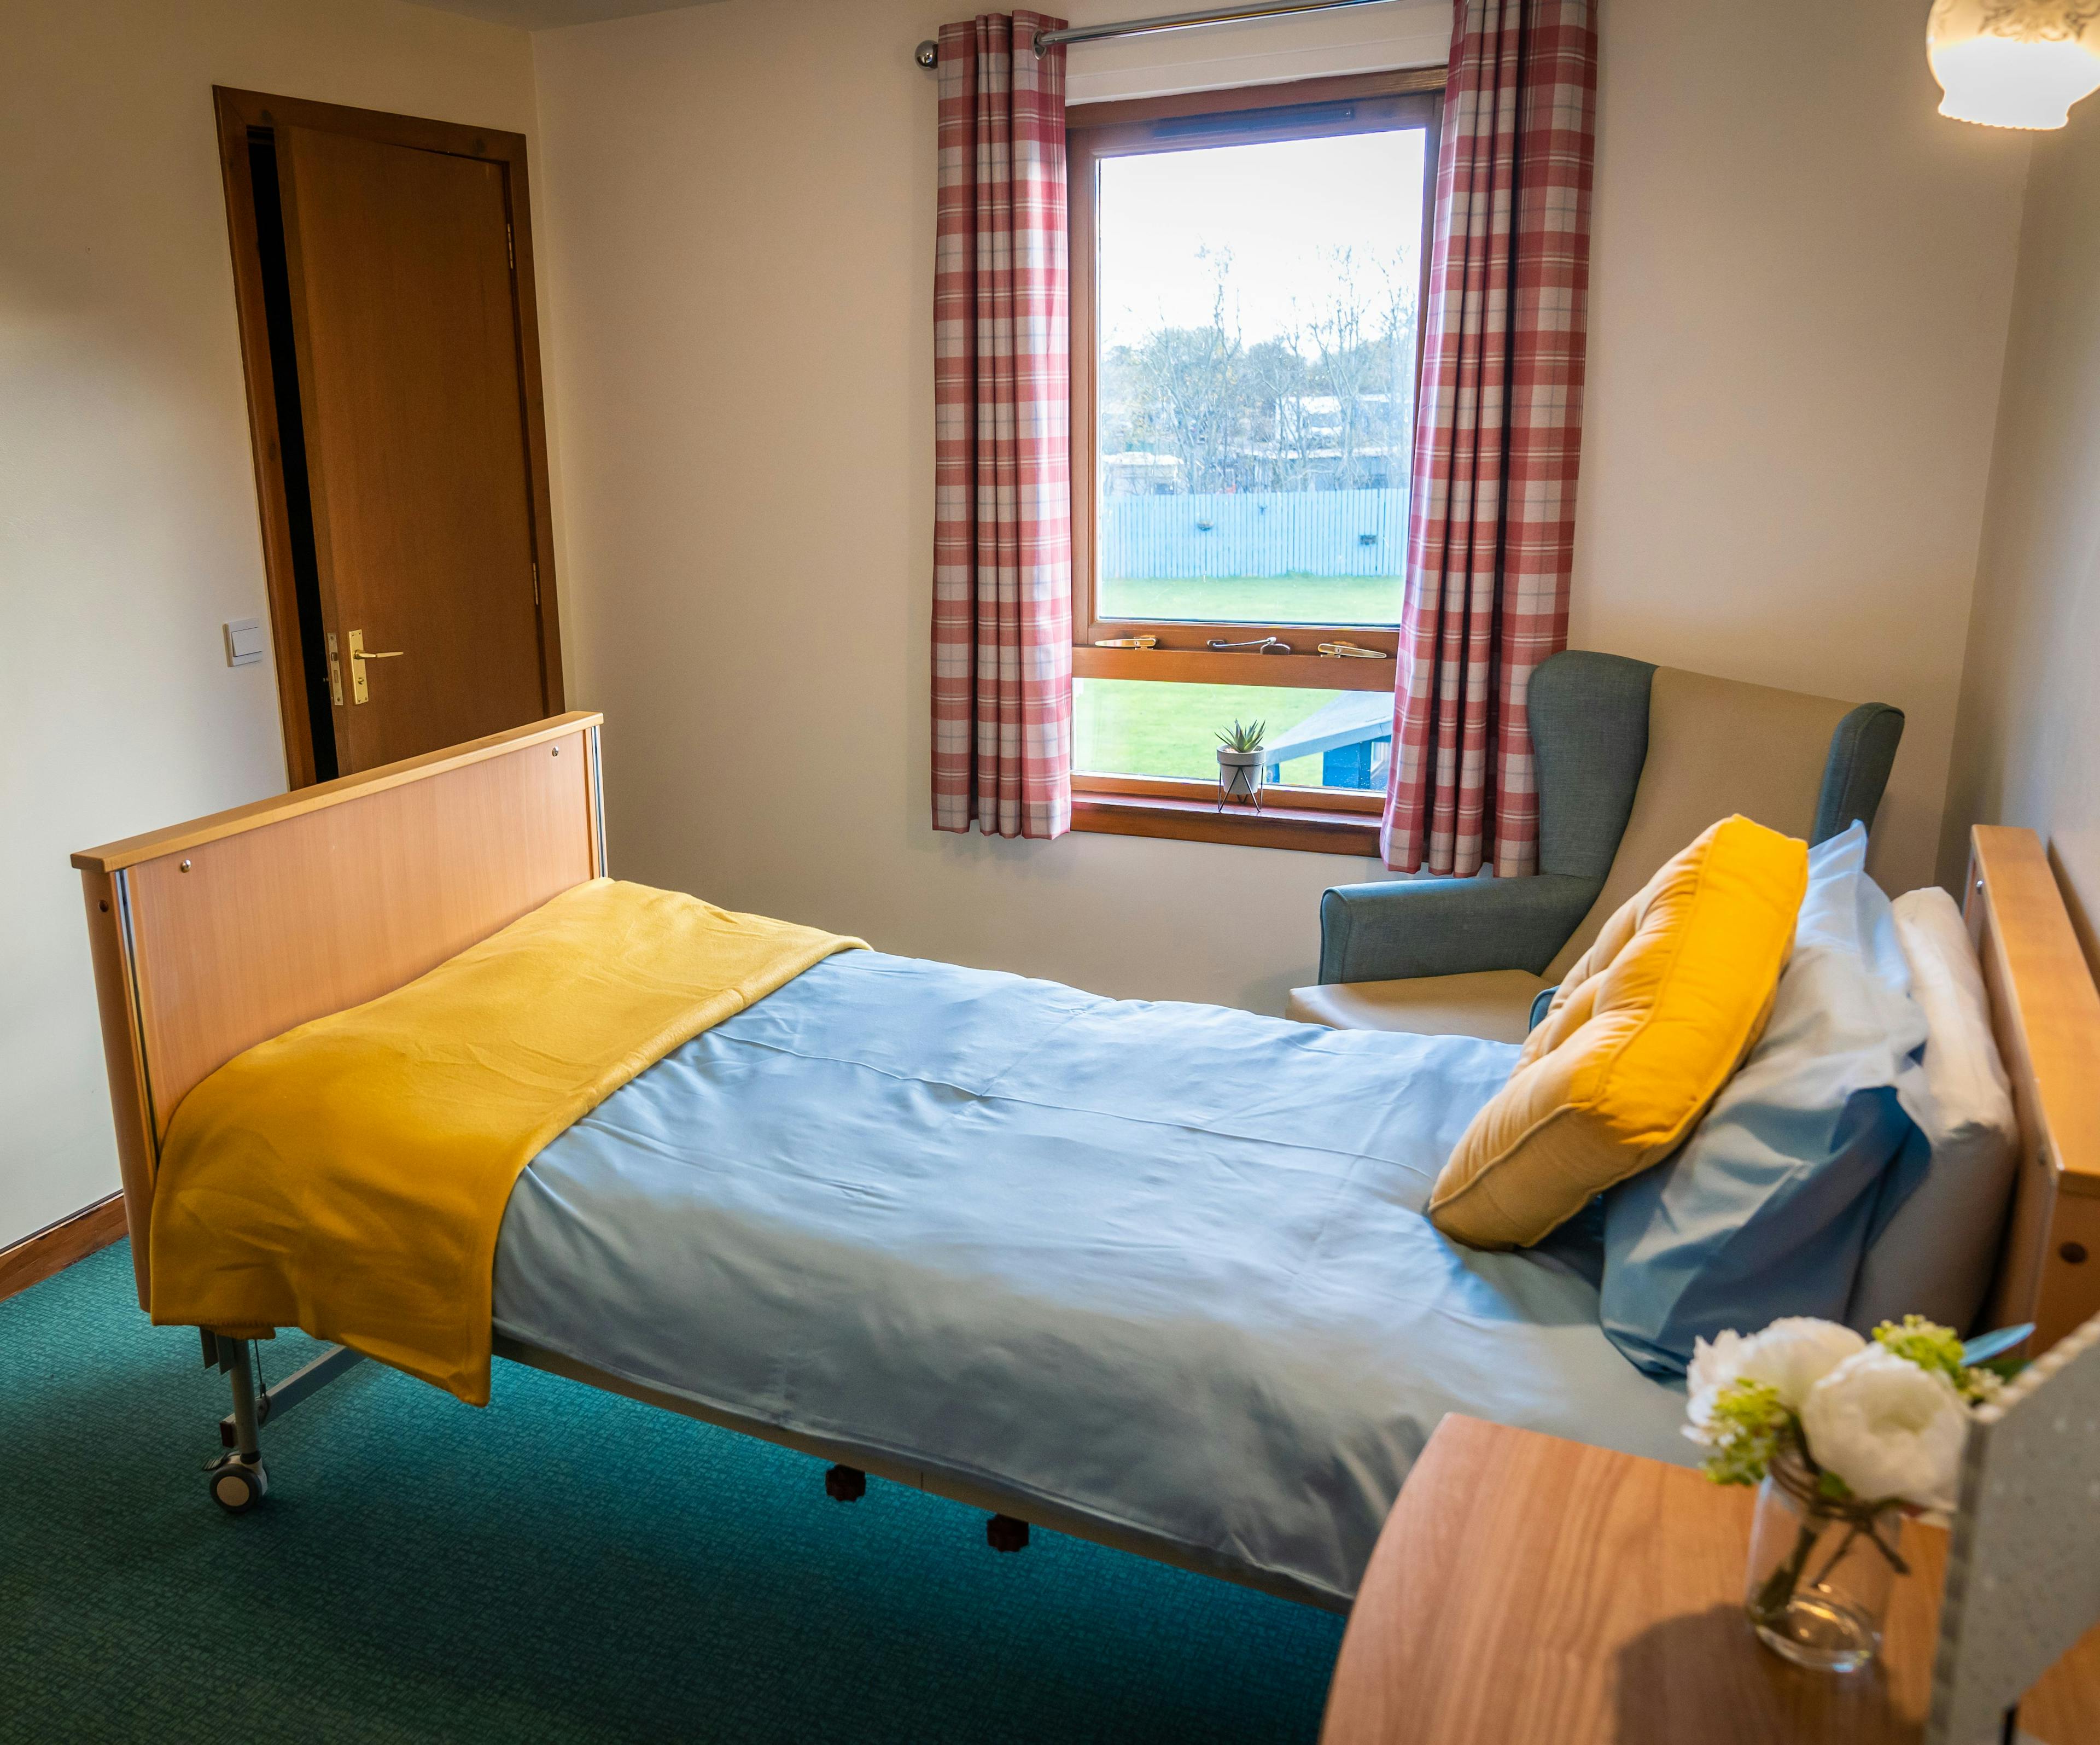 Bedroom at The Meadows Care Home, Dornoch, Scotland